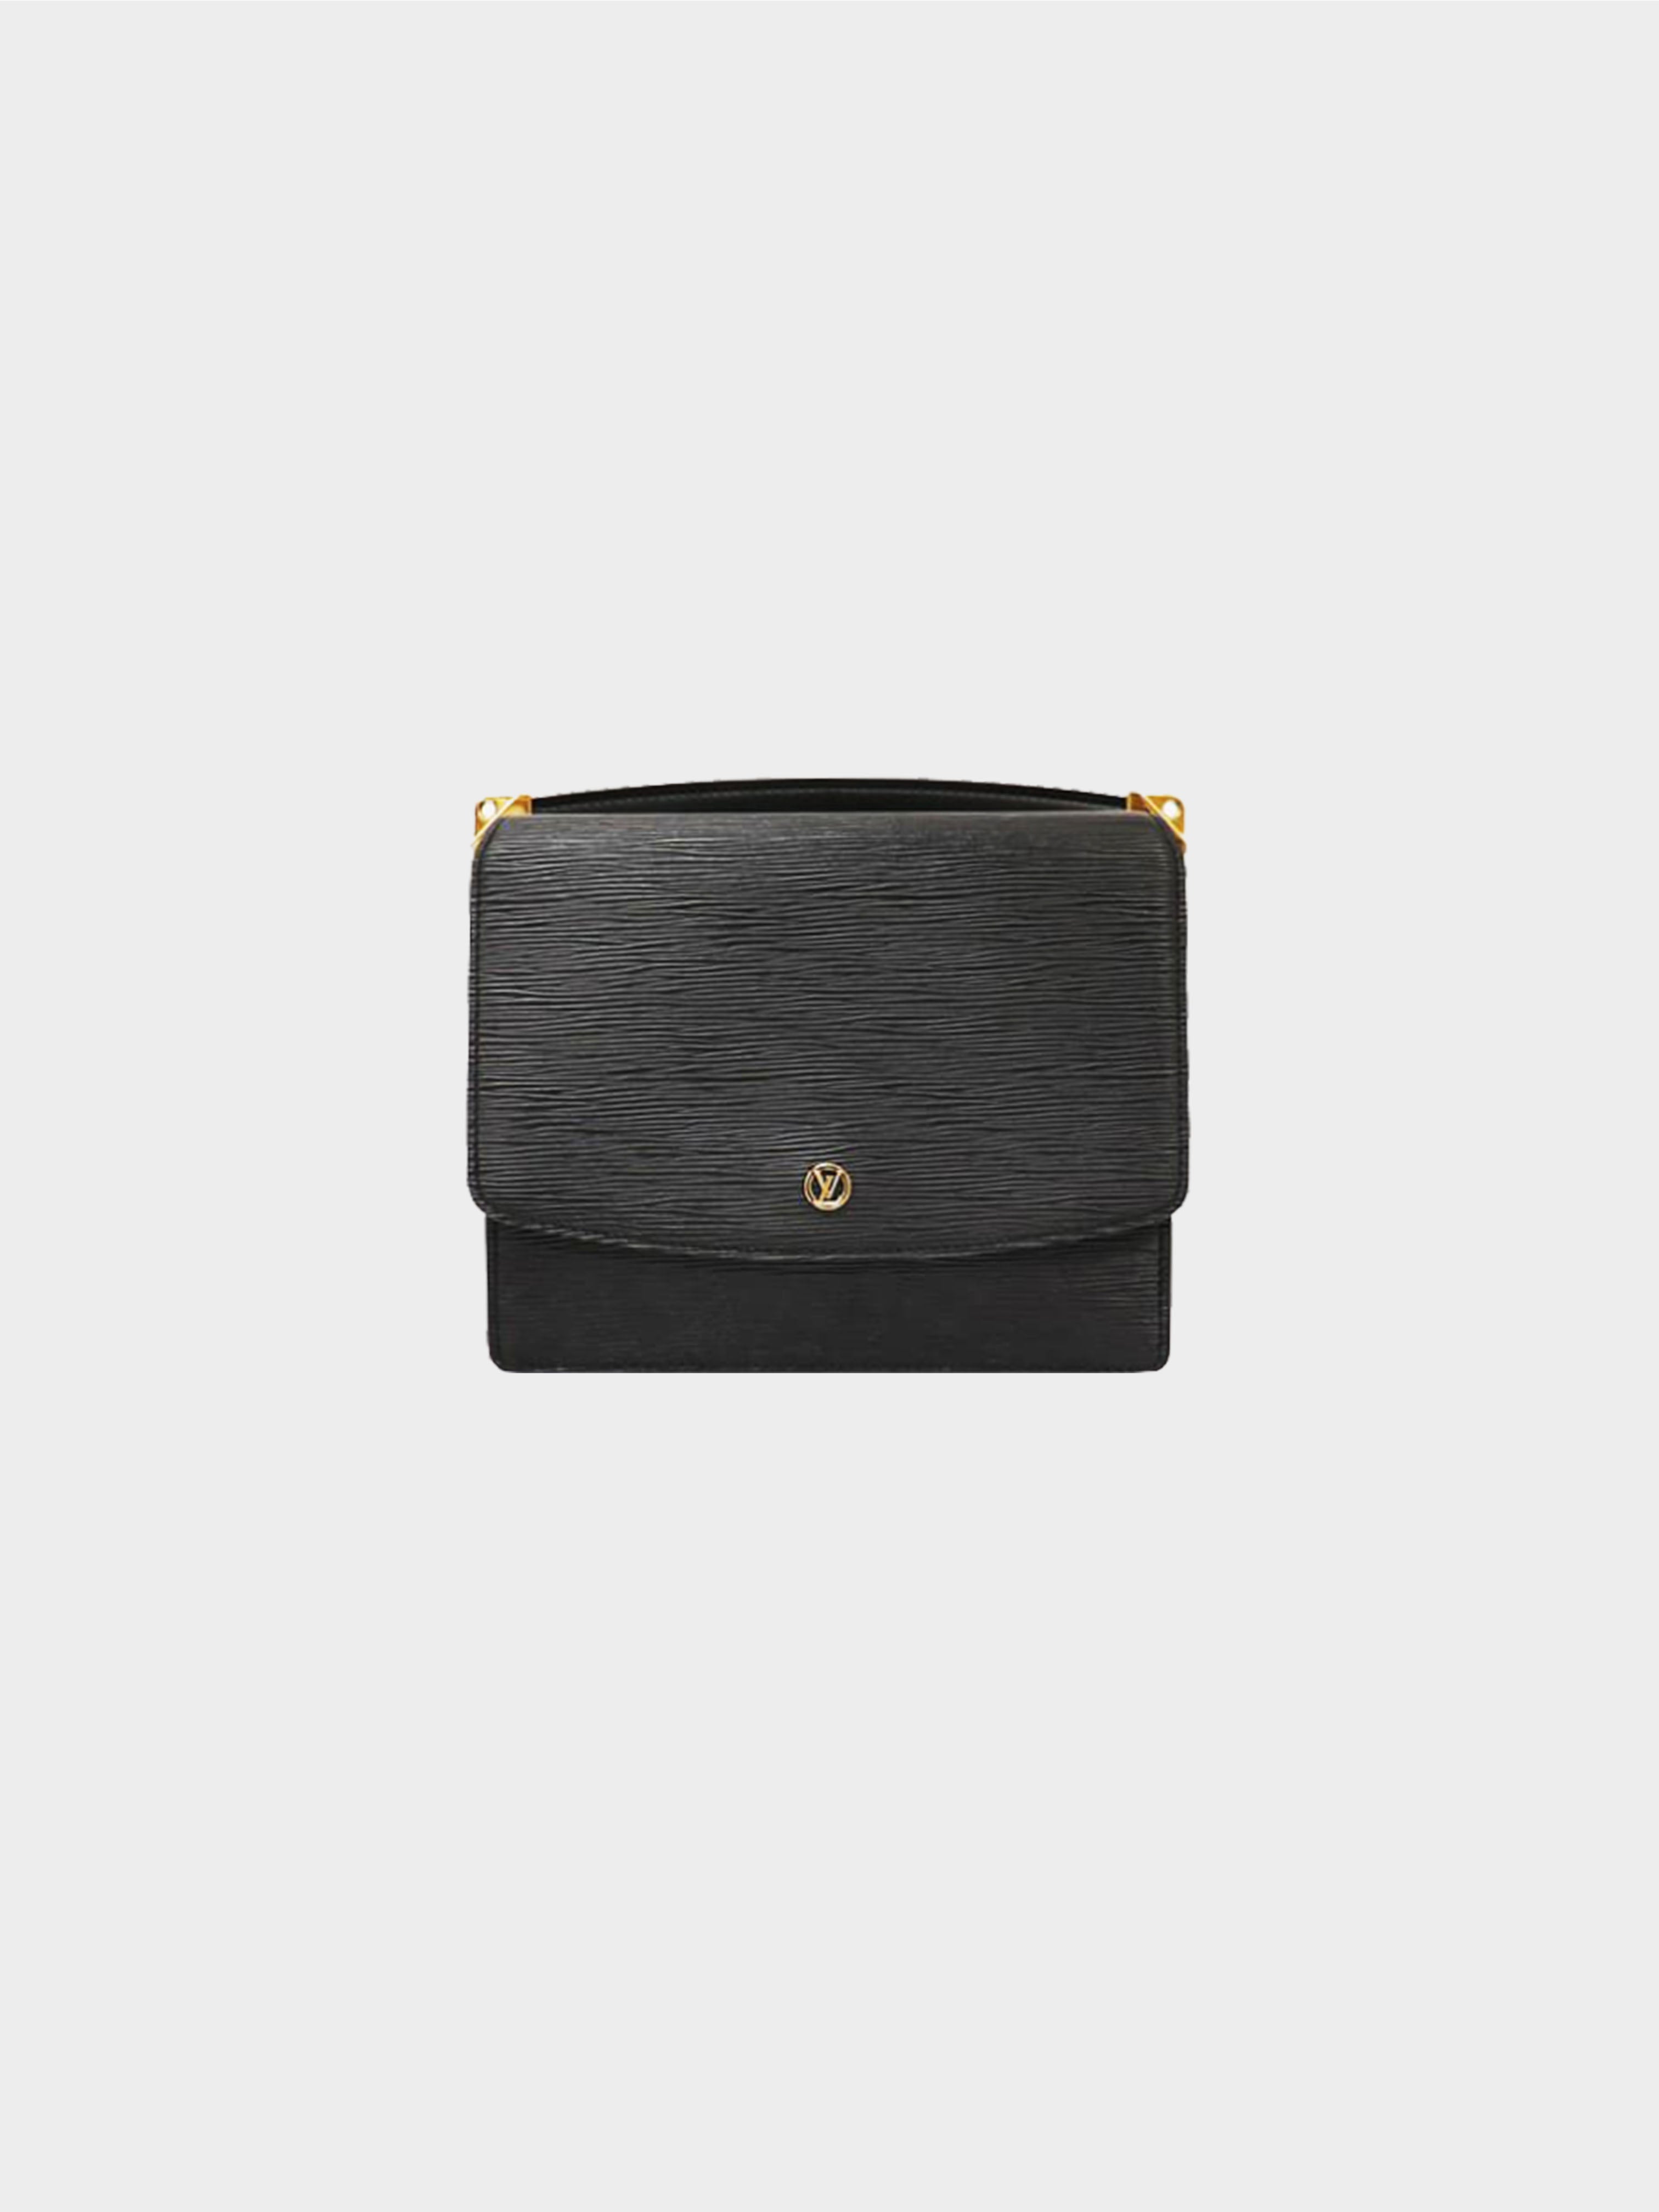 Louis Vuitton 2000s Black Vernis Bird Leather Handbag · INTO